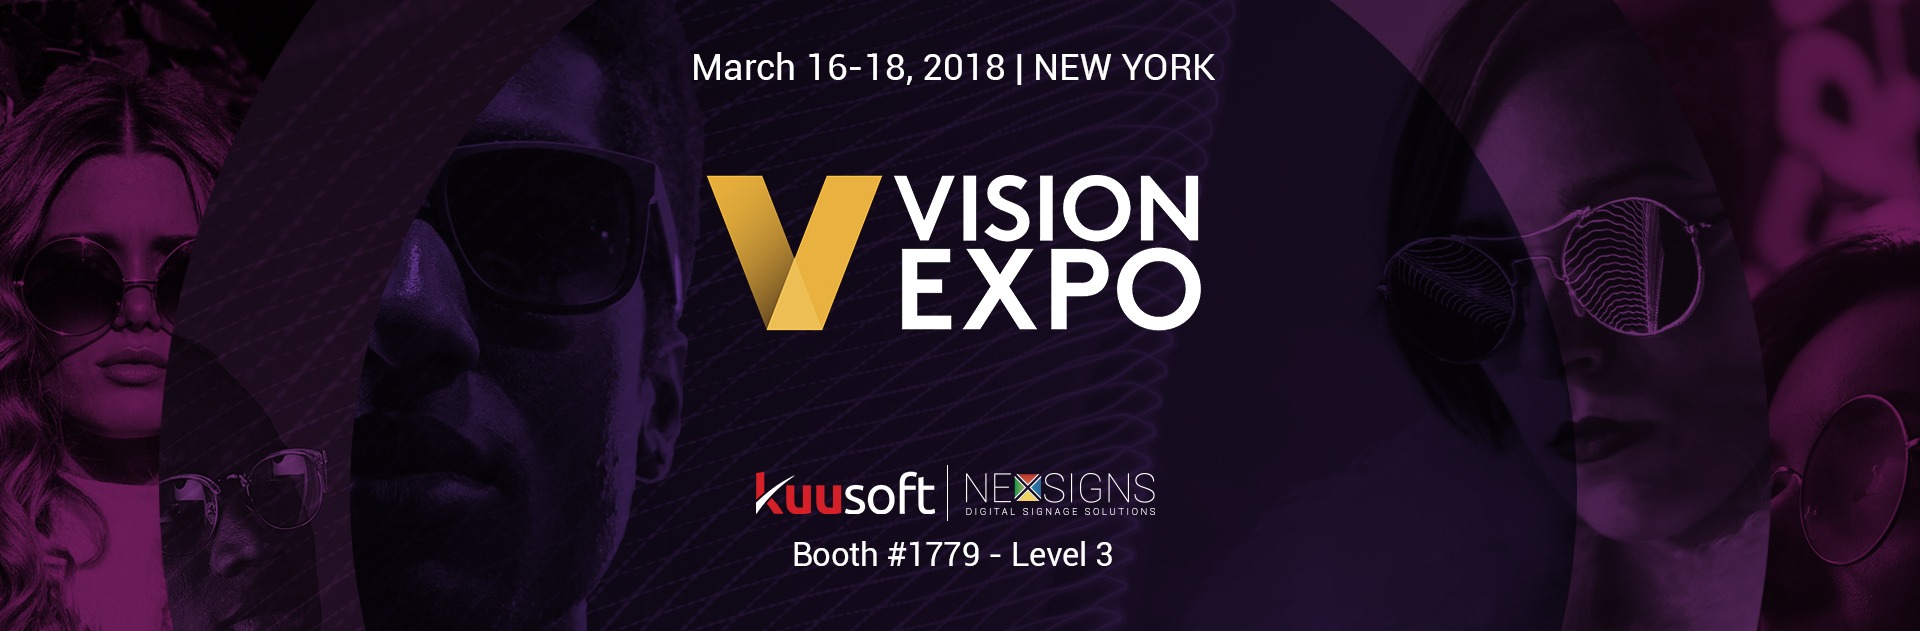 Vision Expo East 2018 - Kuusoft Corp.